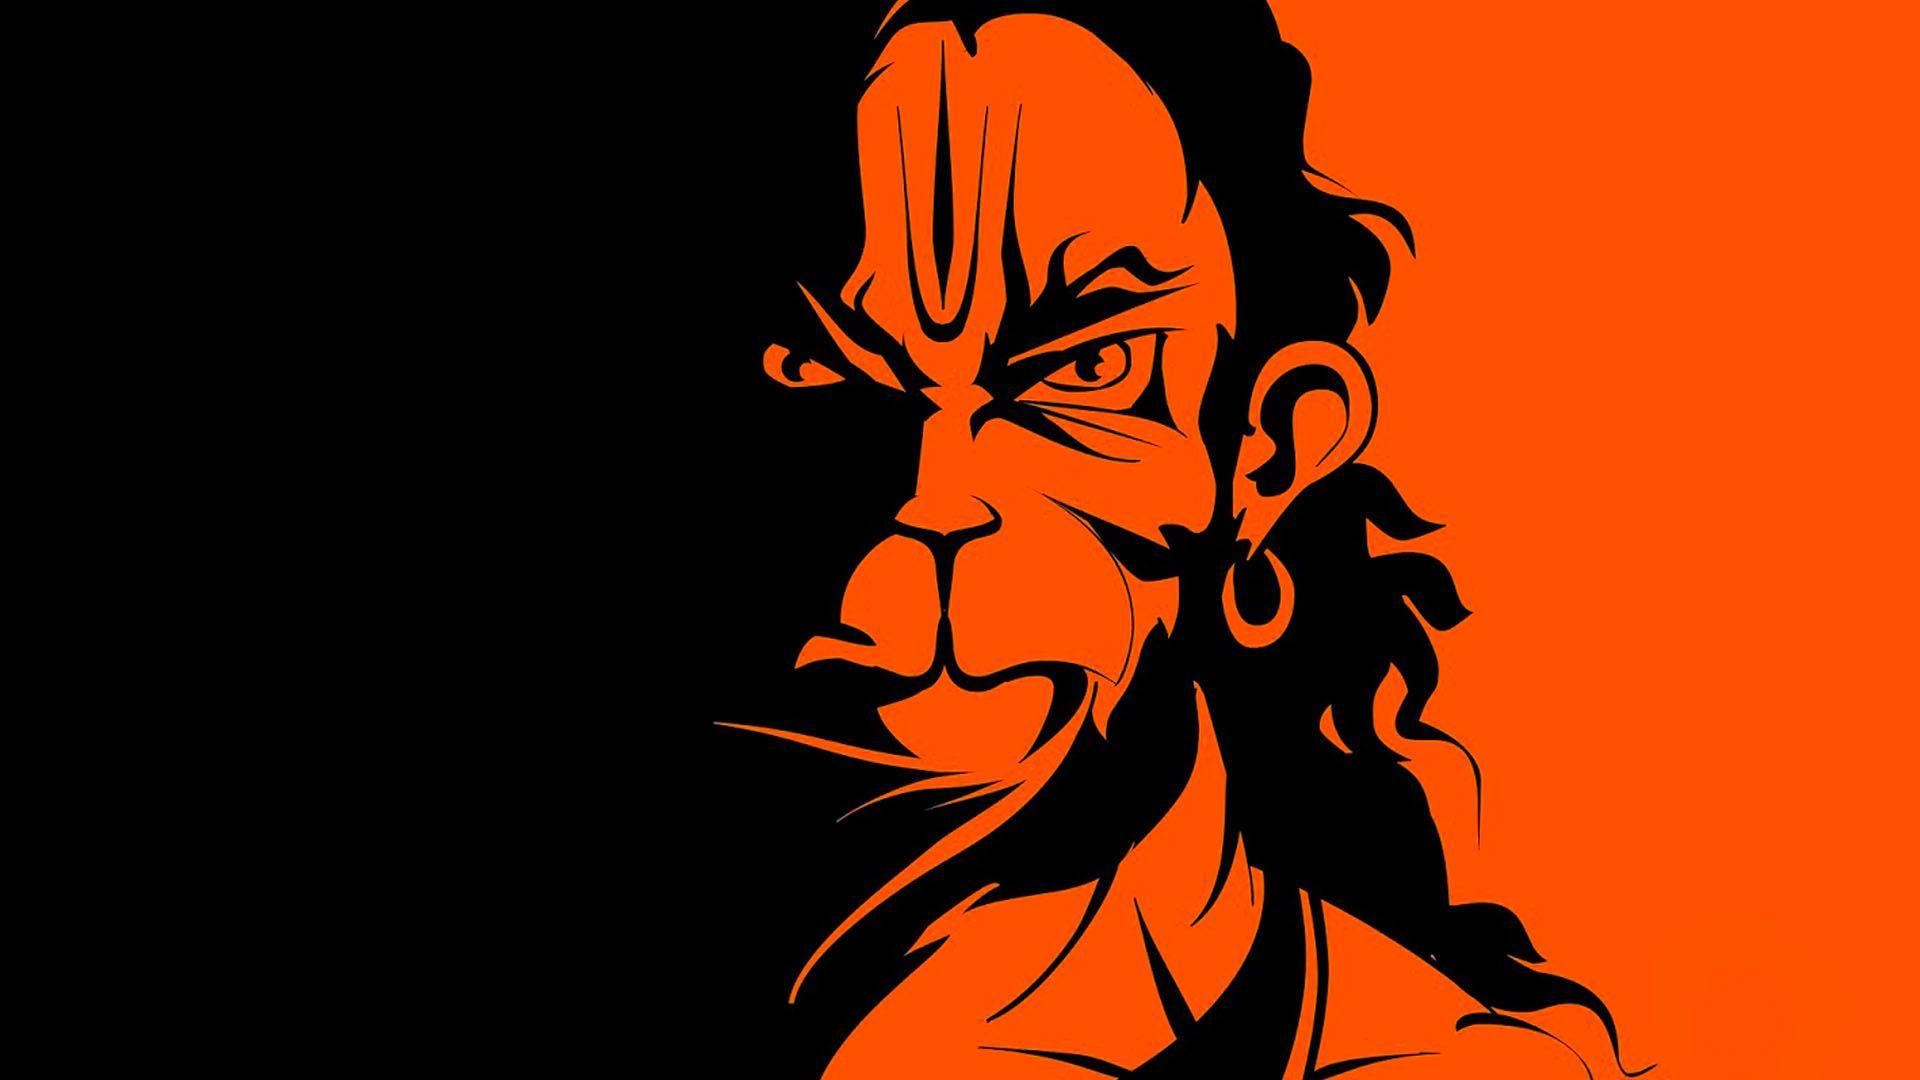 Hanuman animated. Hanuman wallpaper, Hanuman chalisa, Hanuman image